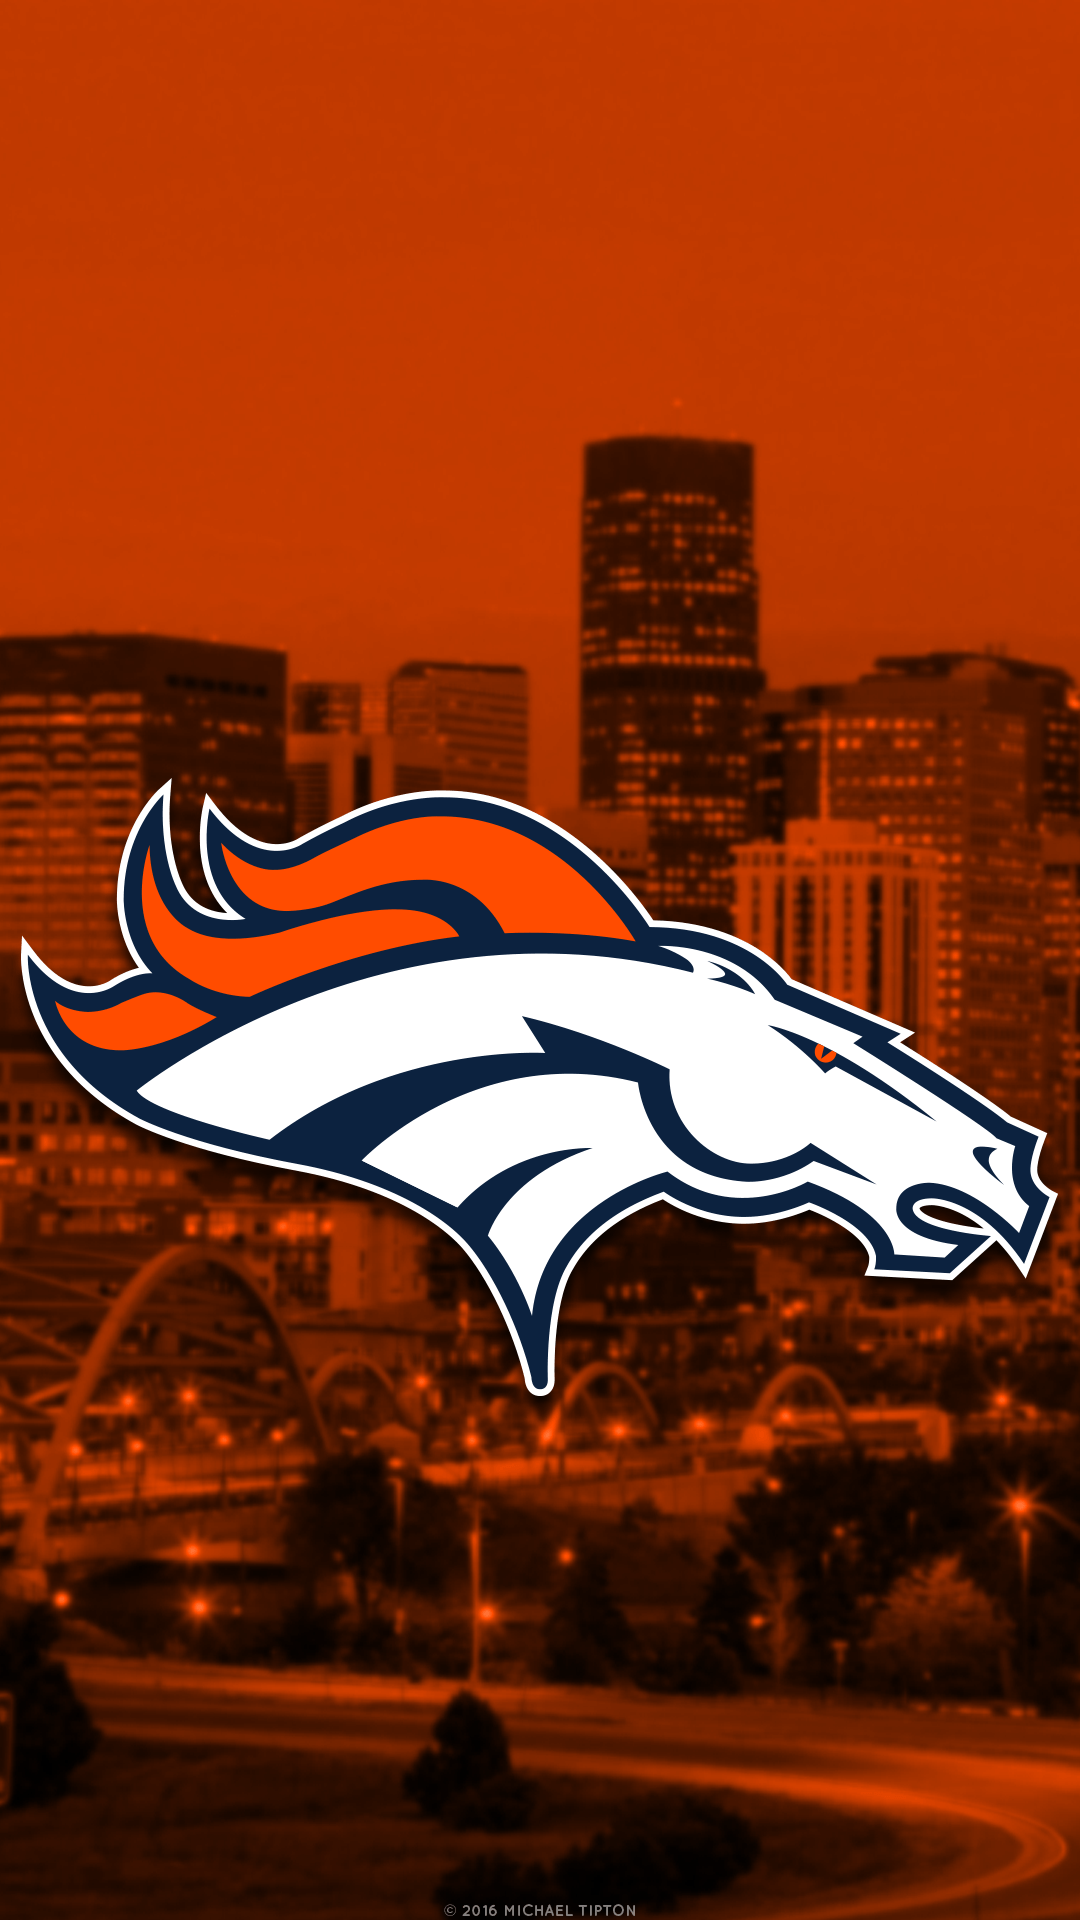 Denver Broncos Wallpaper For Android